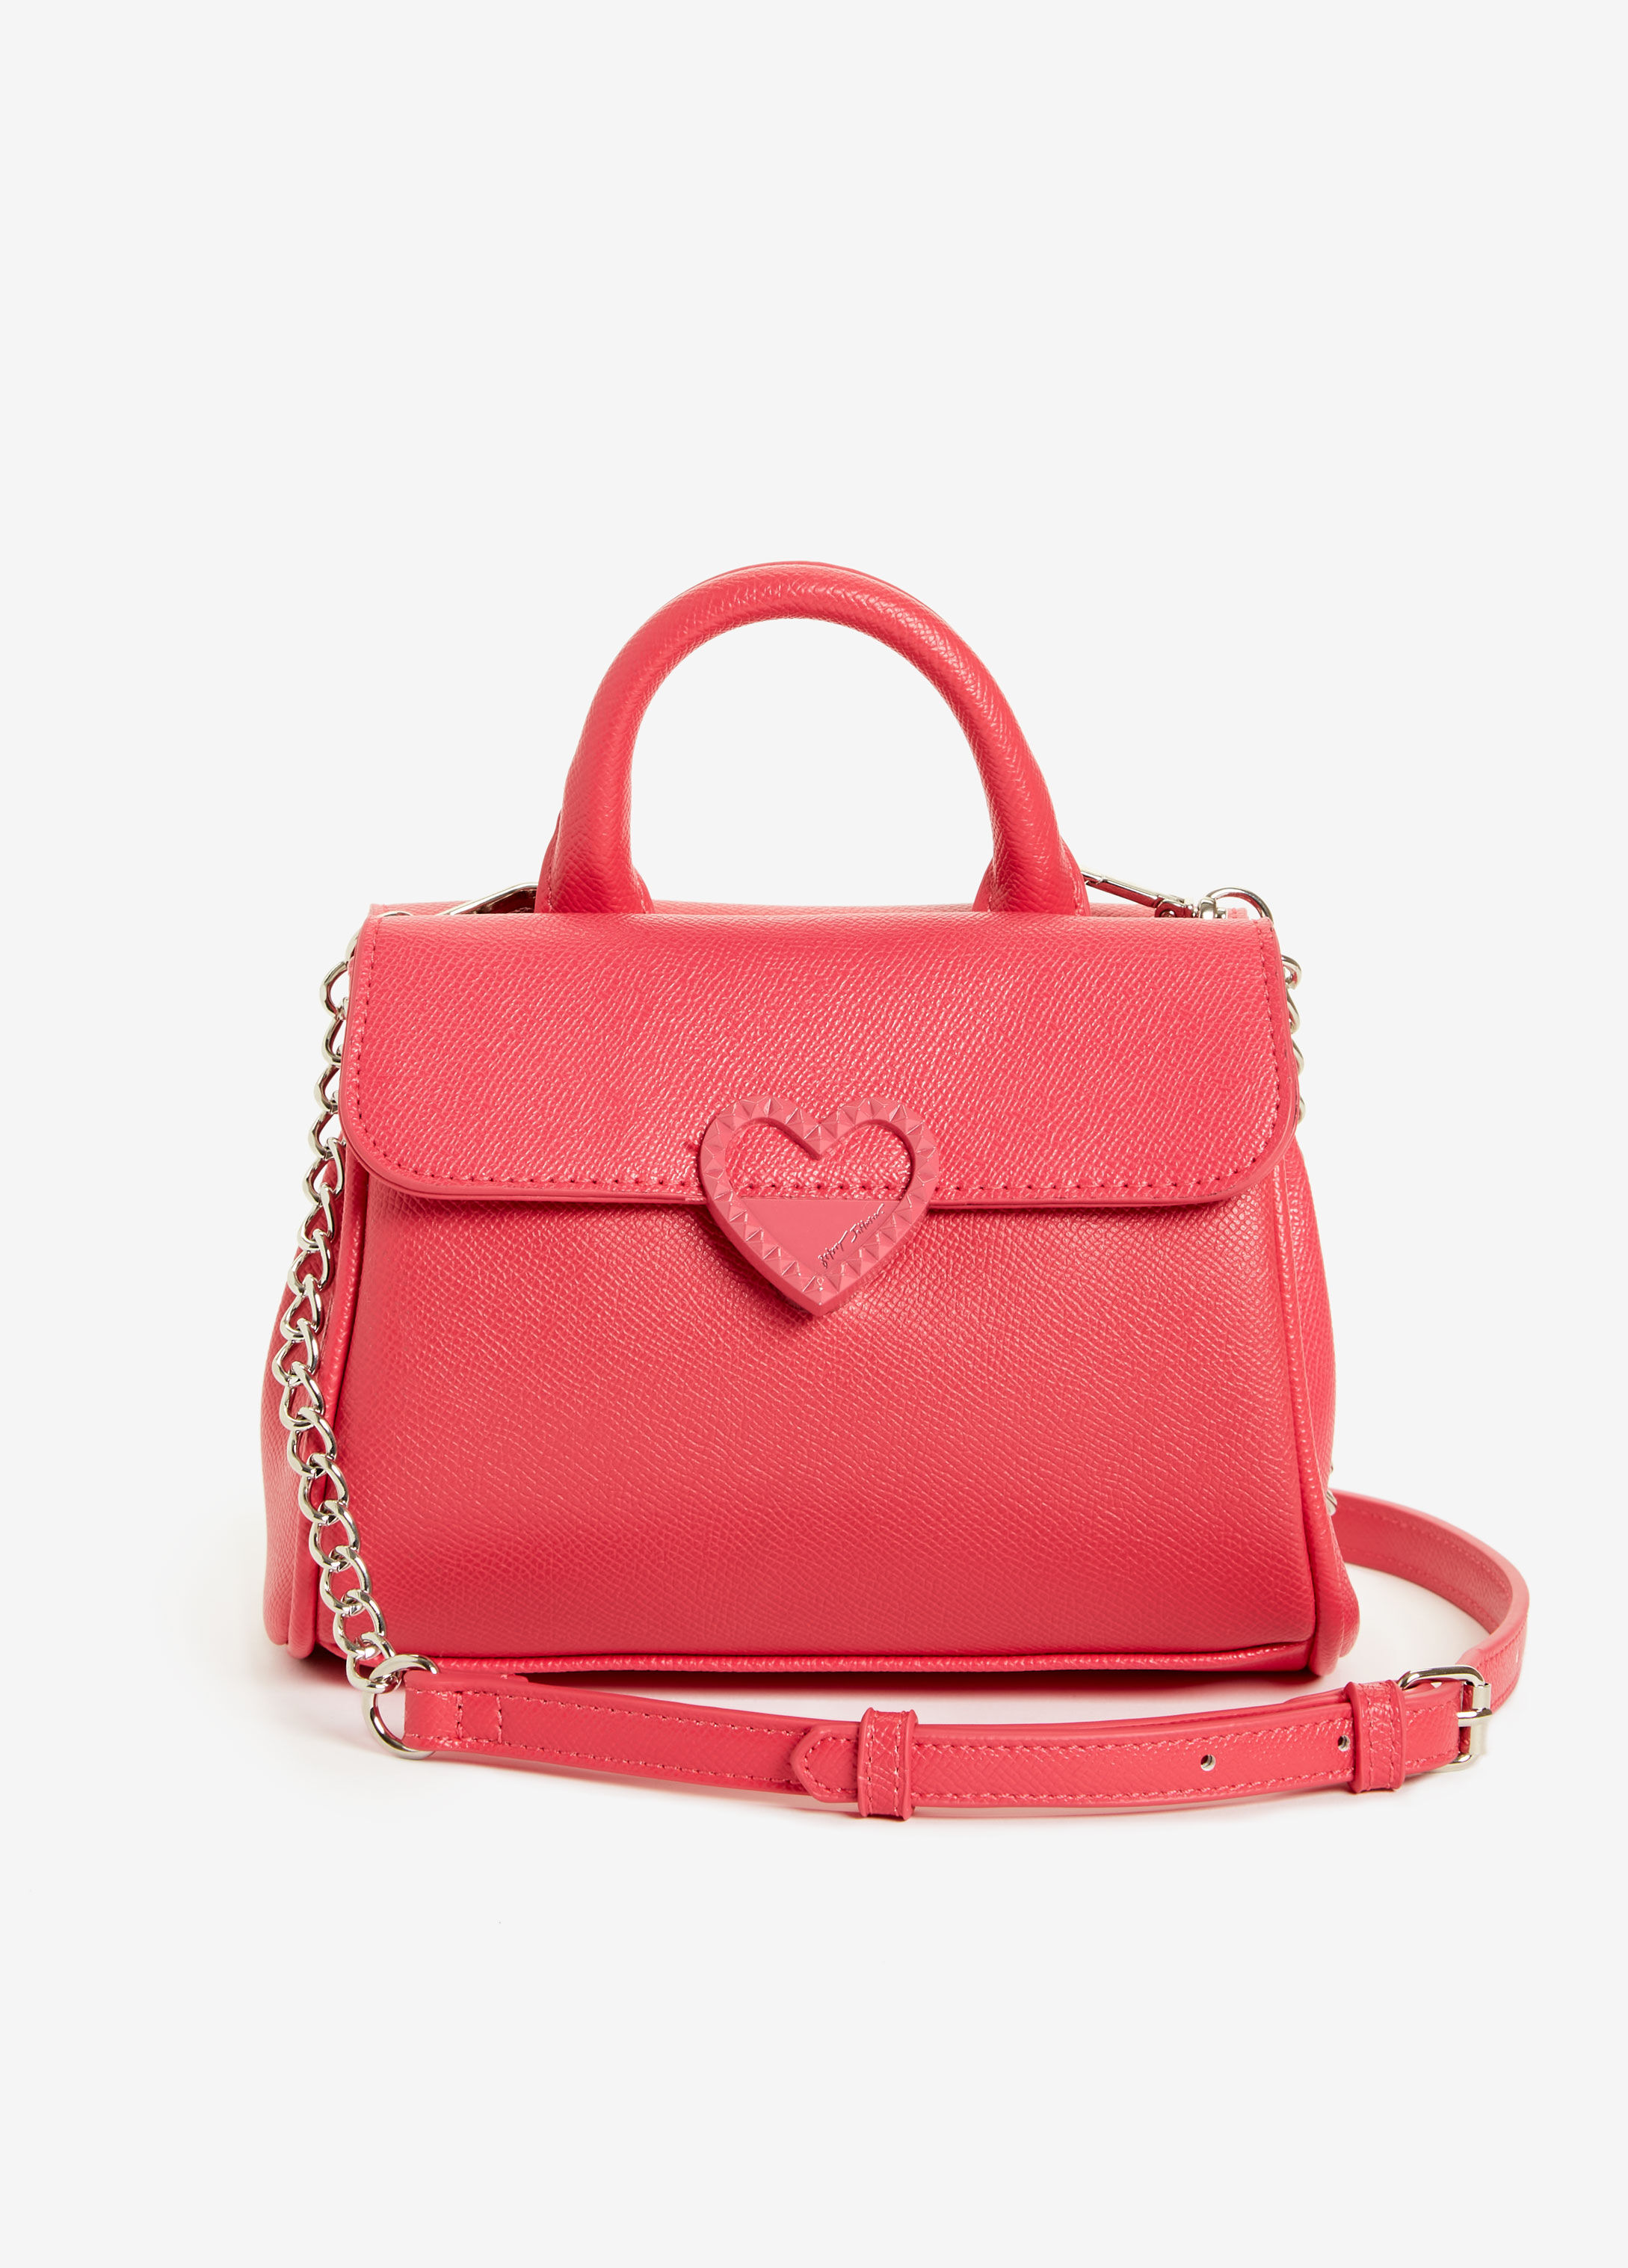 Betsey Johnson Dog Earred Flap Bag, Multi: Handbags: Amazon.com